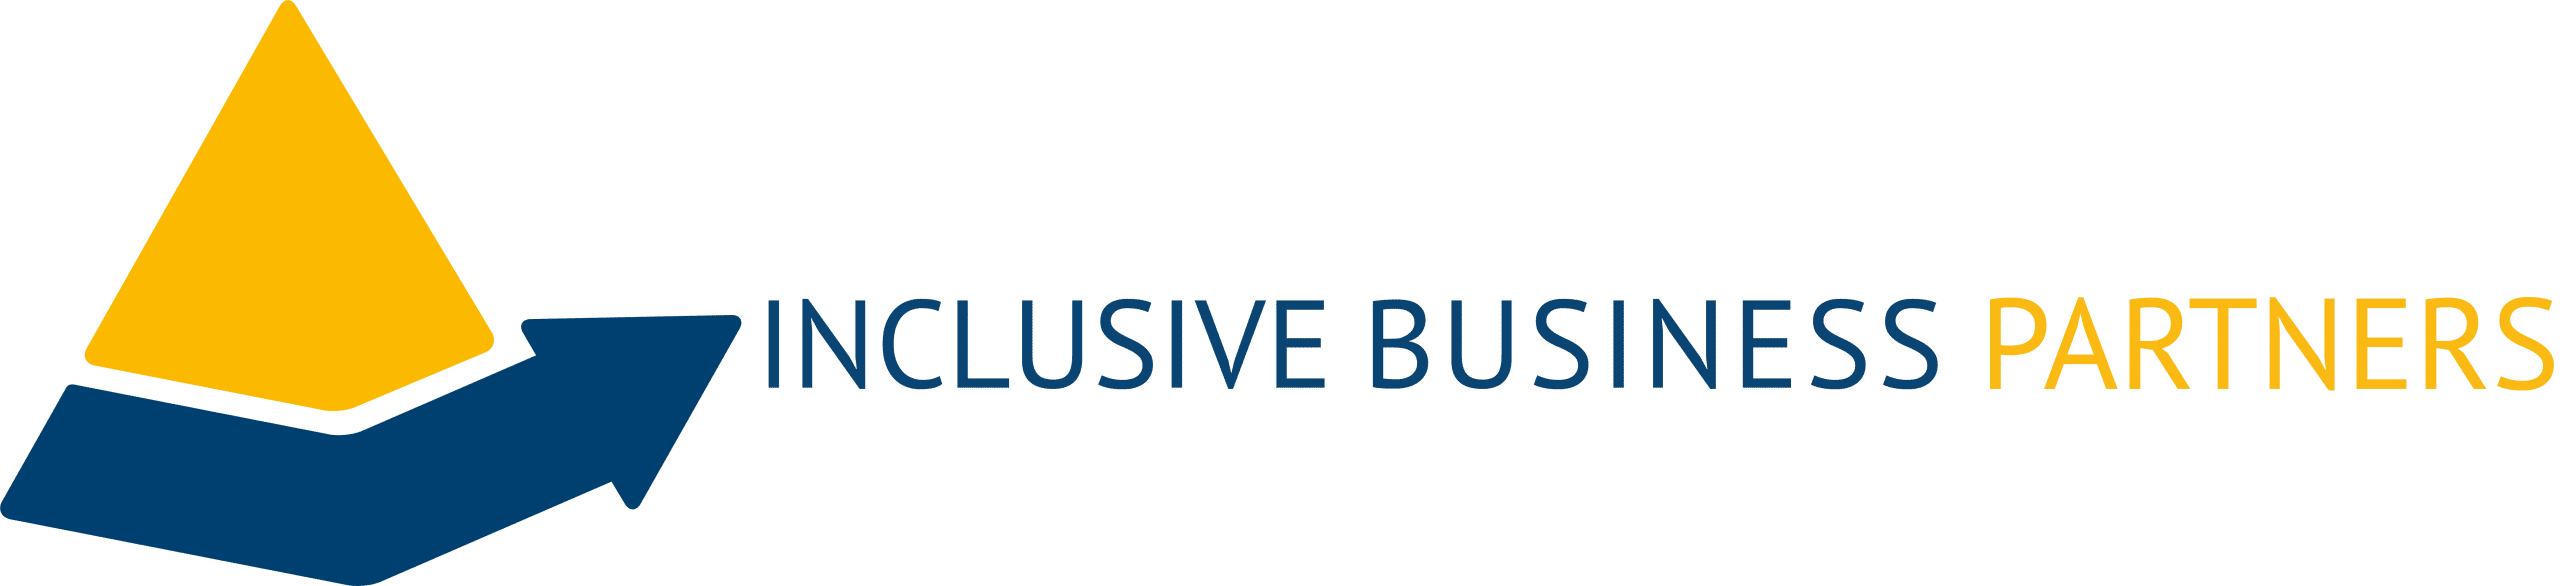 Inclusive Business Partners-Inclusive Business Partners